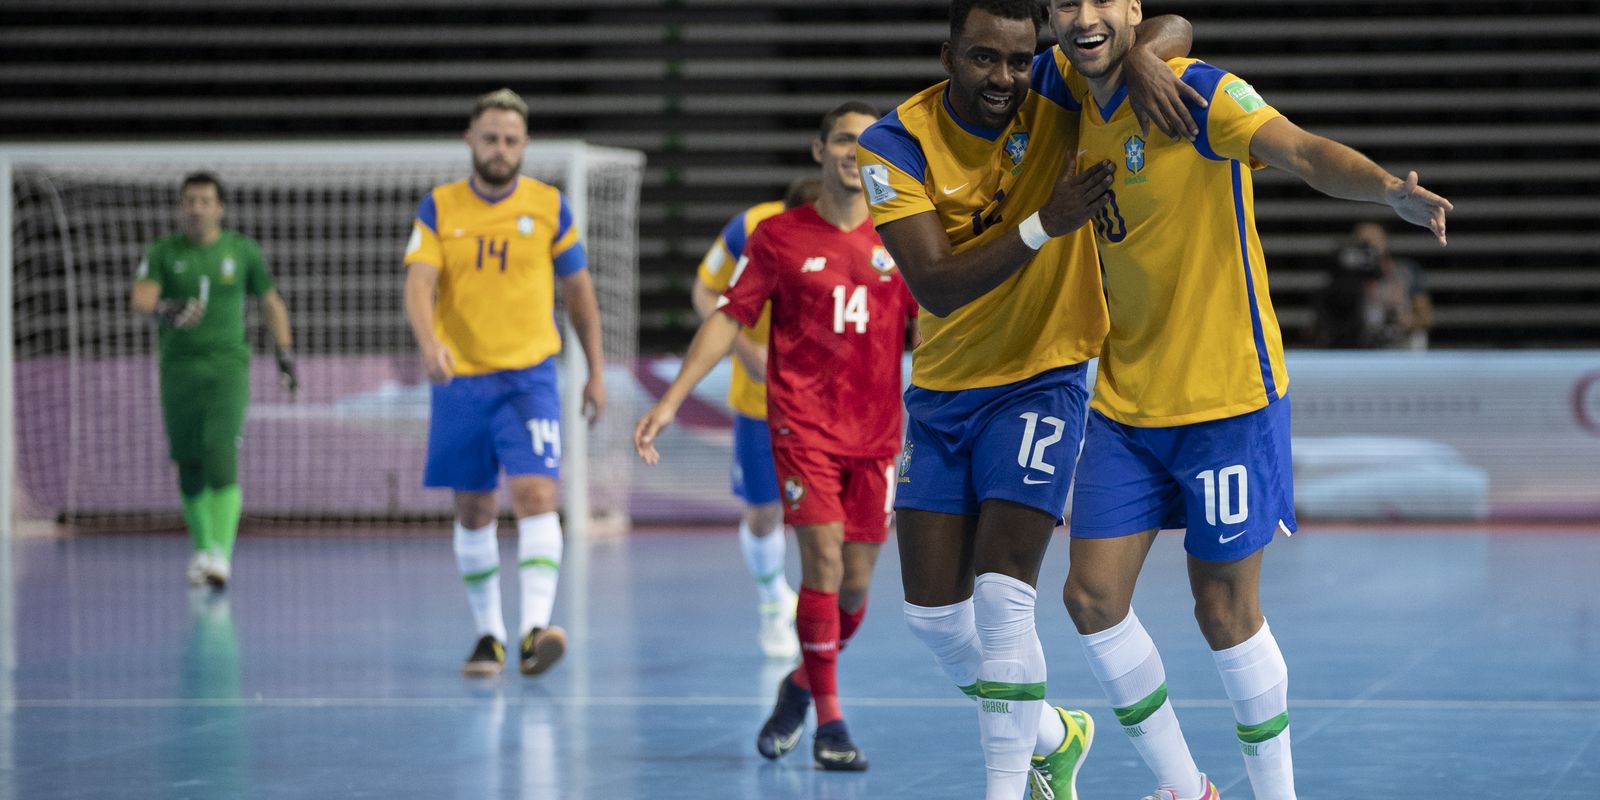 Copa do Mundo de Futsal: onde e como assistir aos jogos do Brasil, Esportes